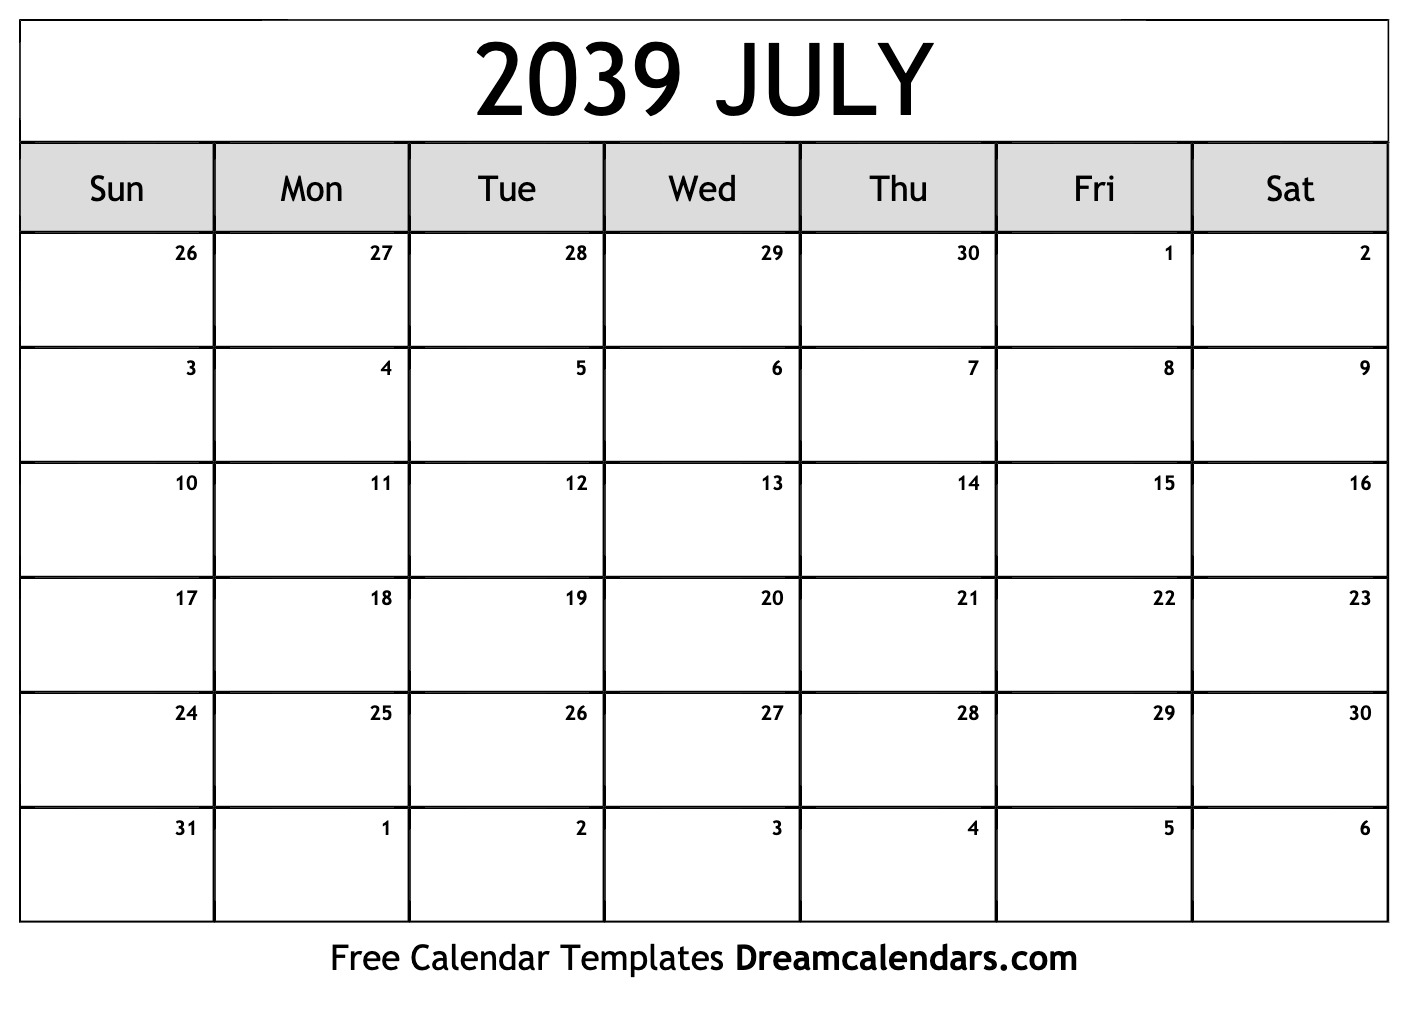 Download Printable July 2039 Calendars